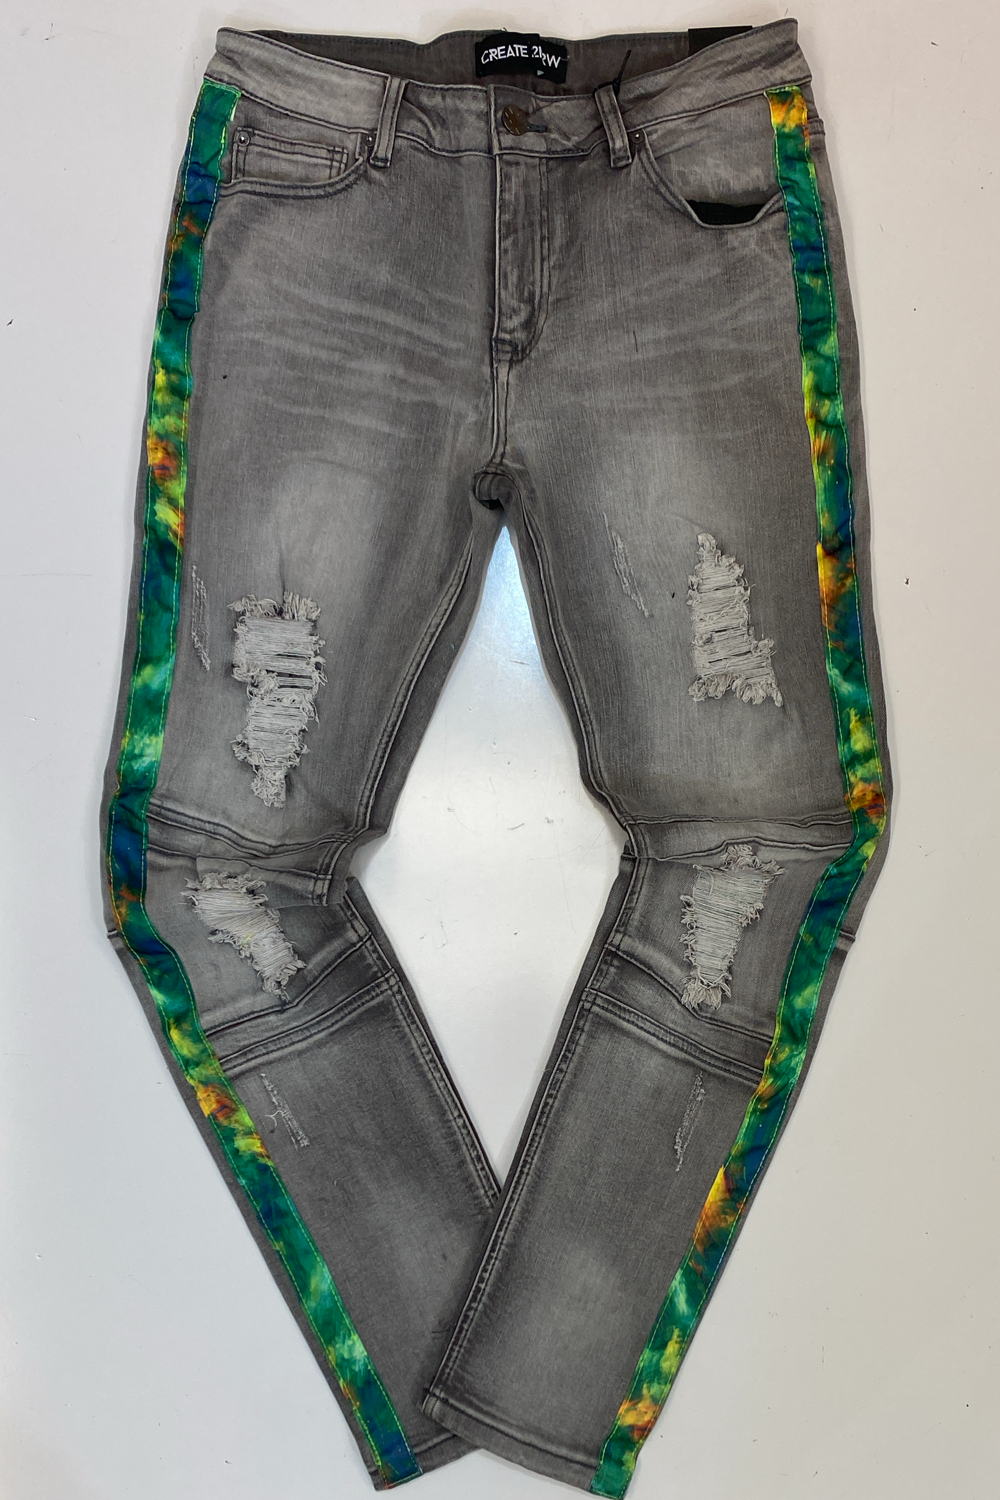 Create Tmrw- denim jeans w/ colorful sides